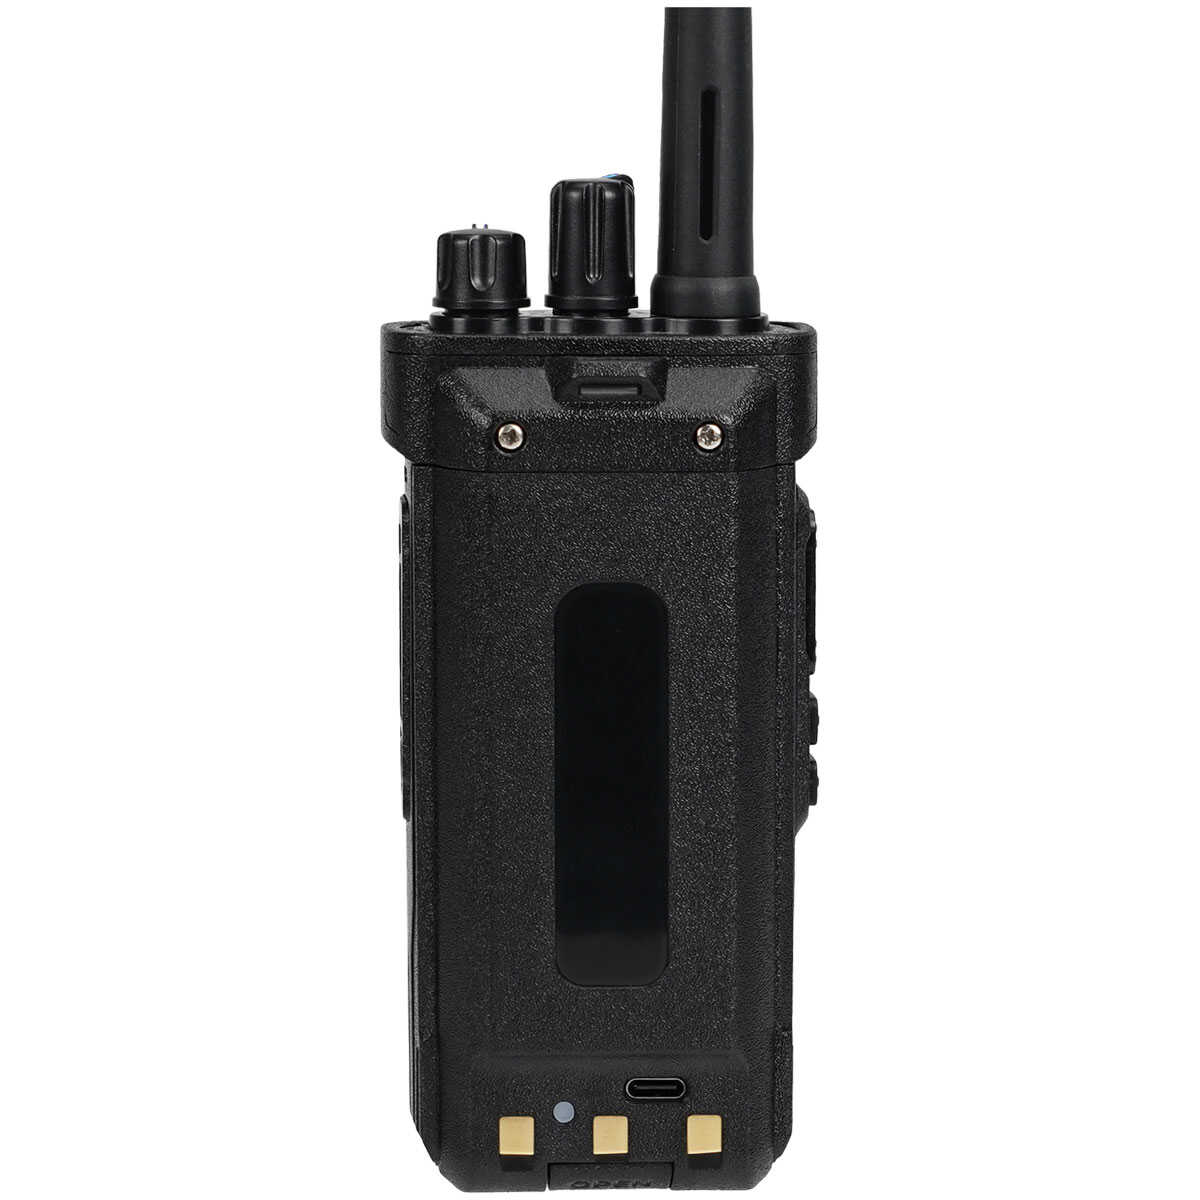 Retevis Ailunce HD1 IP67 FPP Dual Band Dual Time Slot DMR Ham Radio-GPS Version